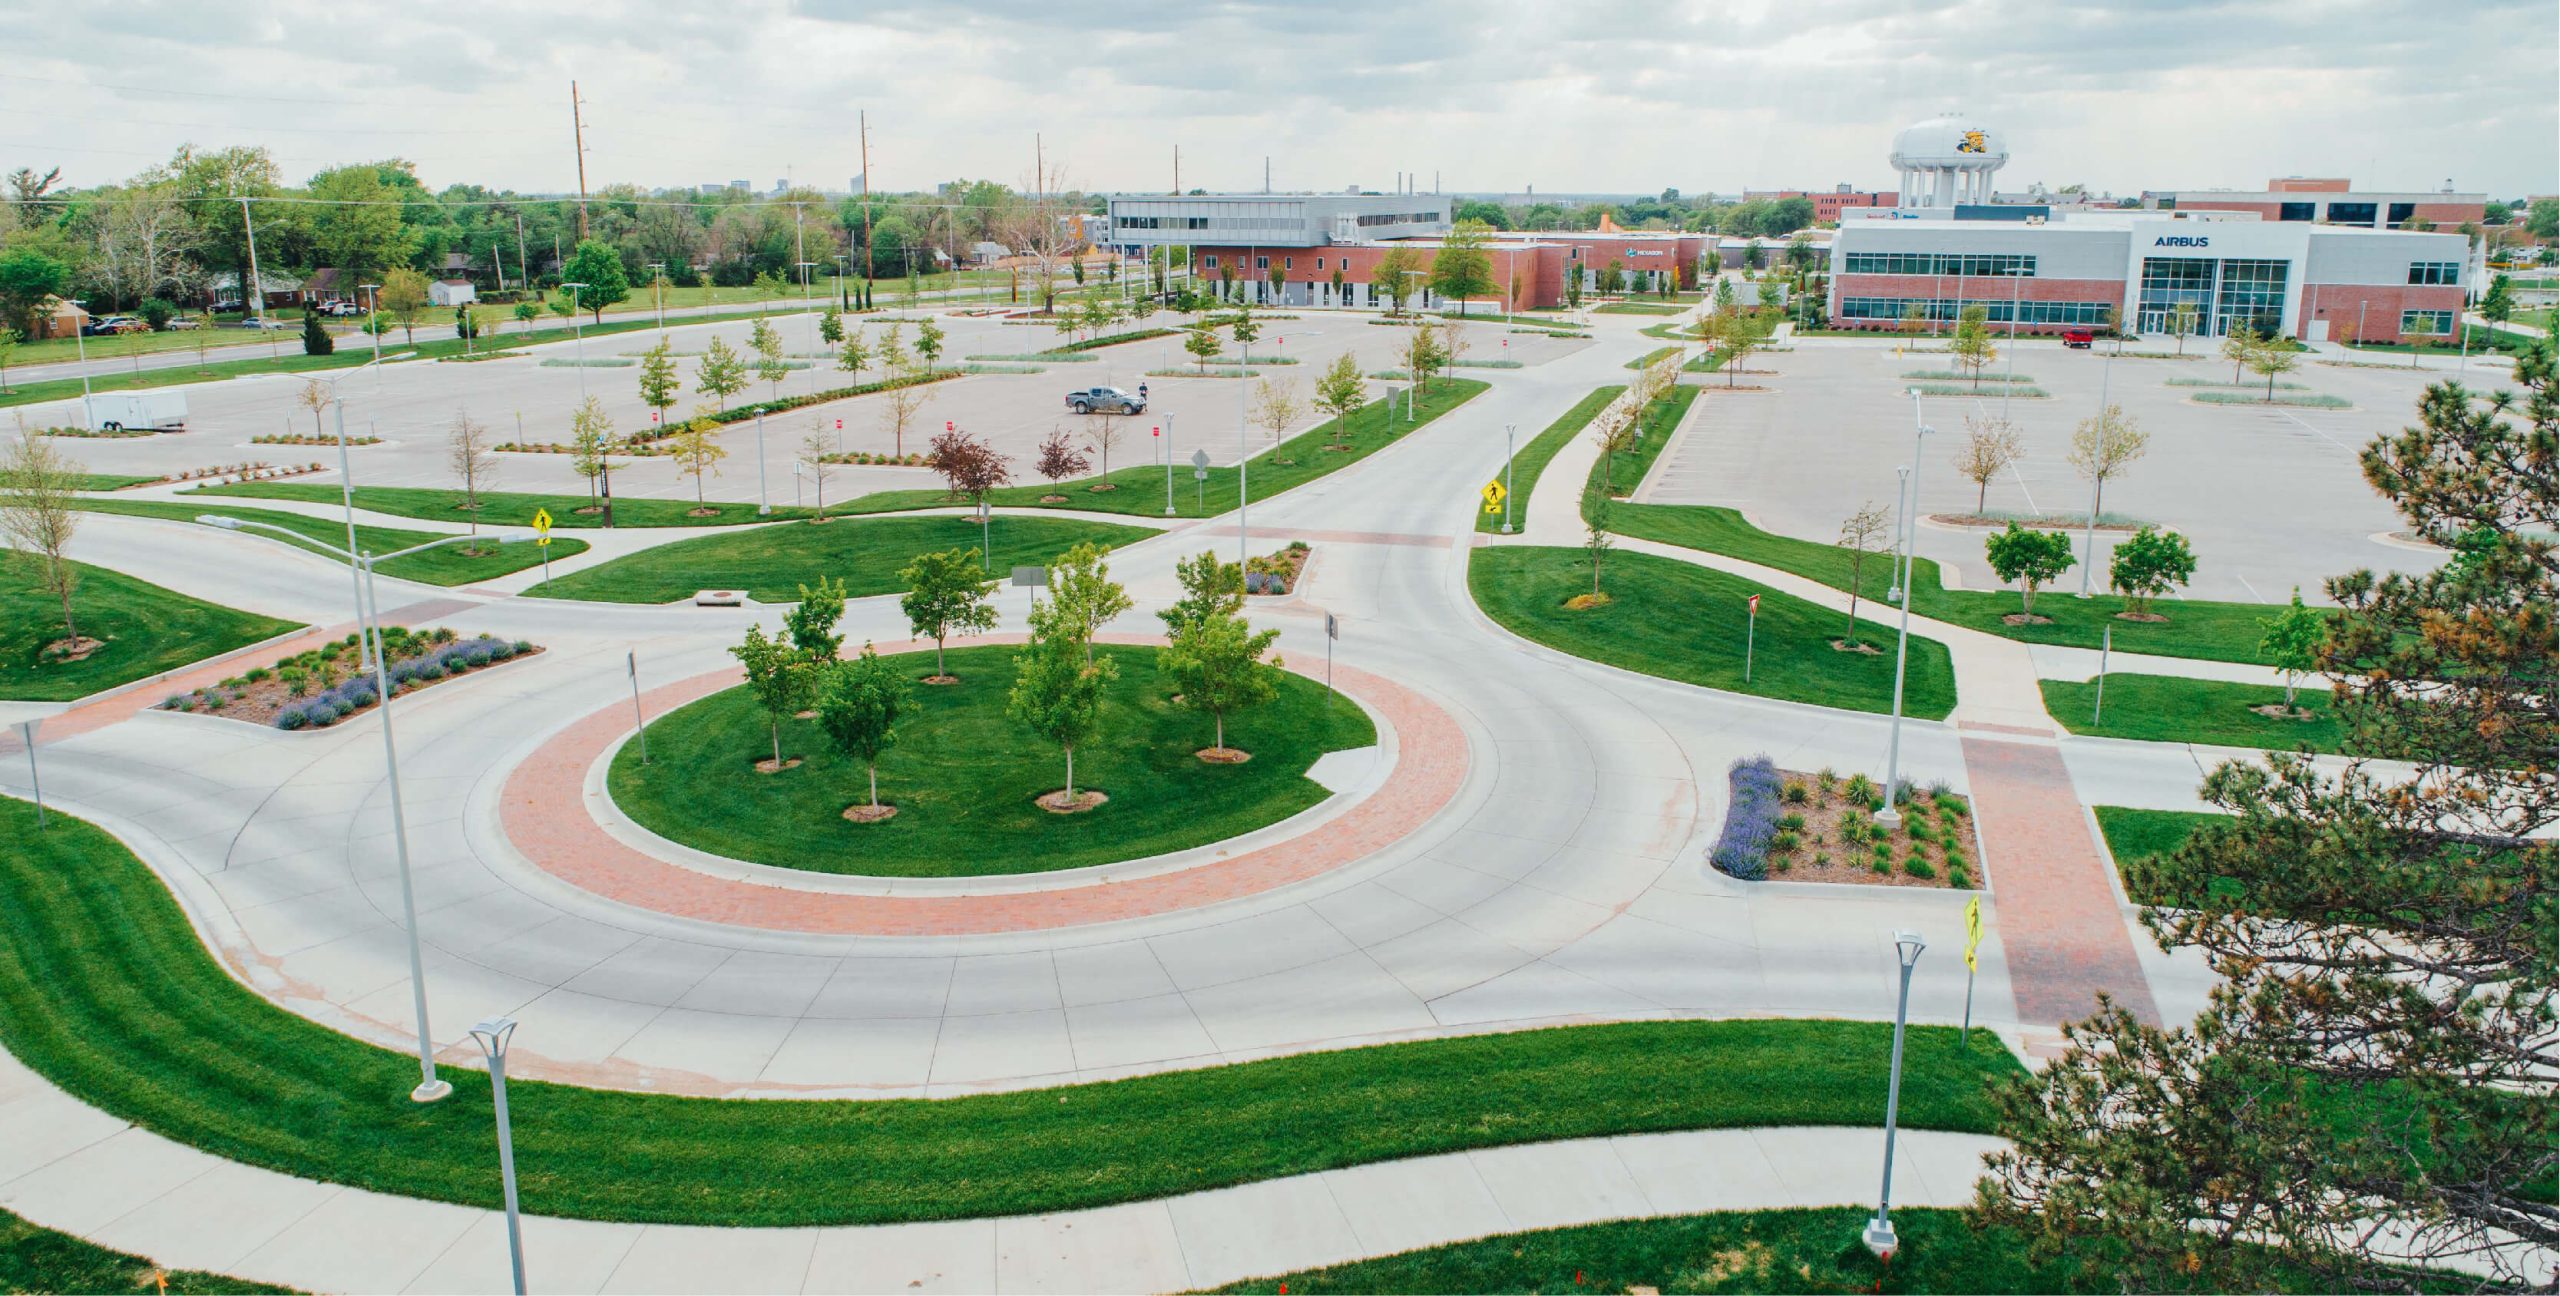 Wichita State University innovation campus 17th street entrance